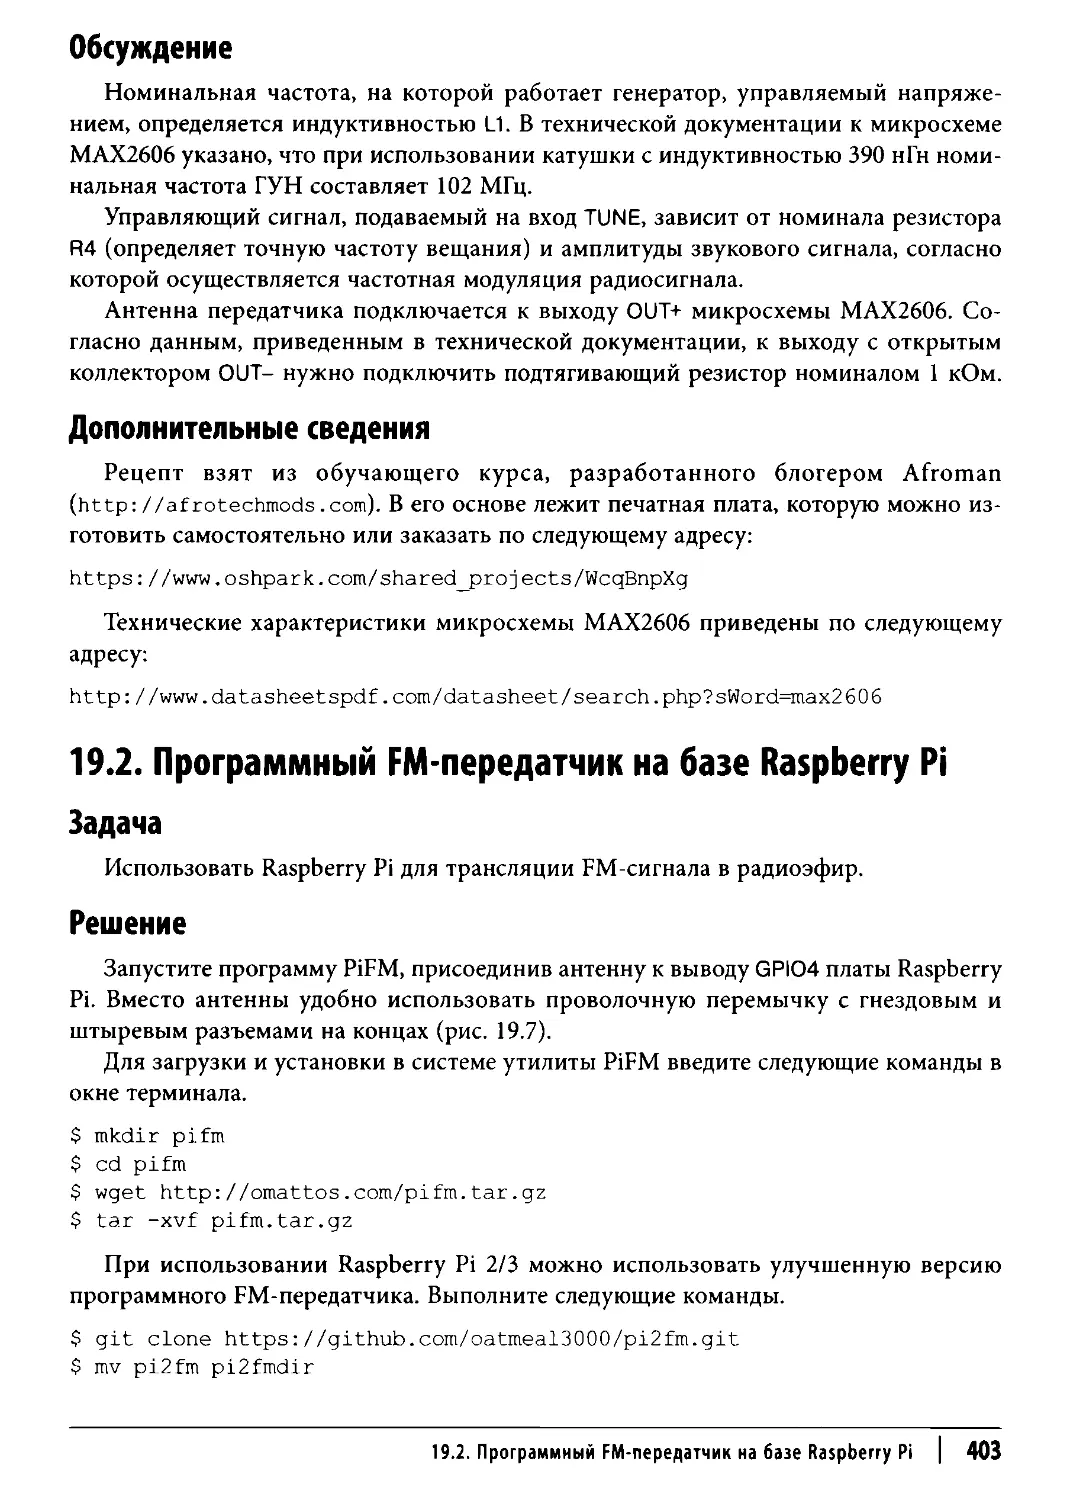 ﻿19.2. Программный FM-передатчик на базе Raspberry P